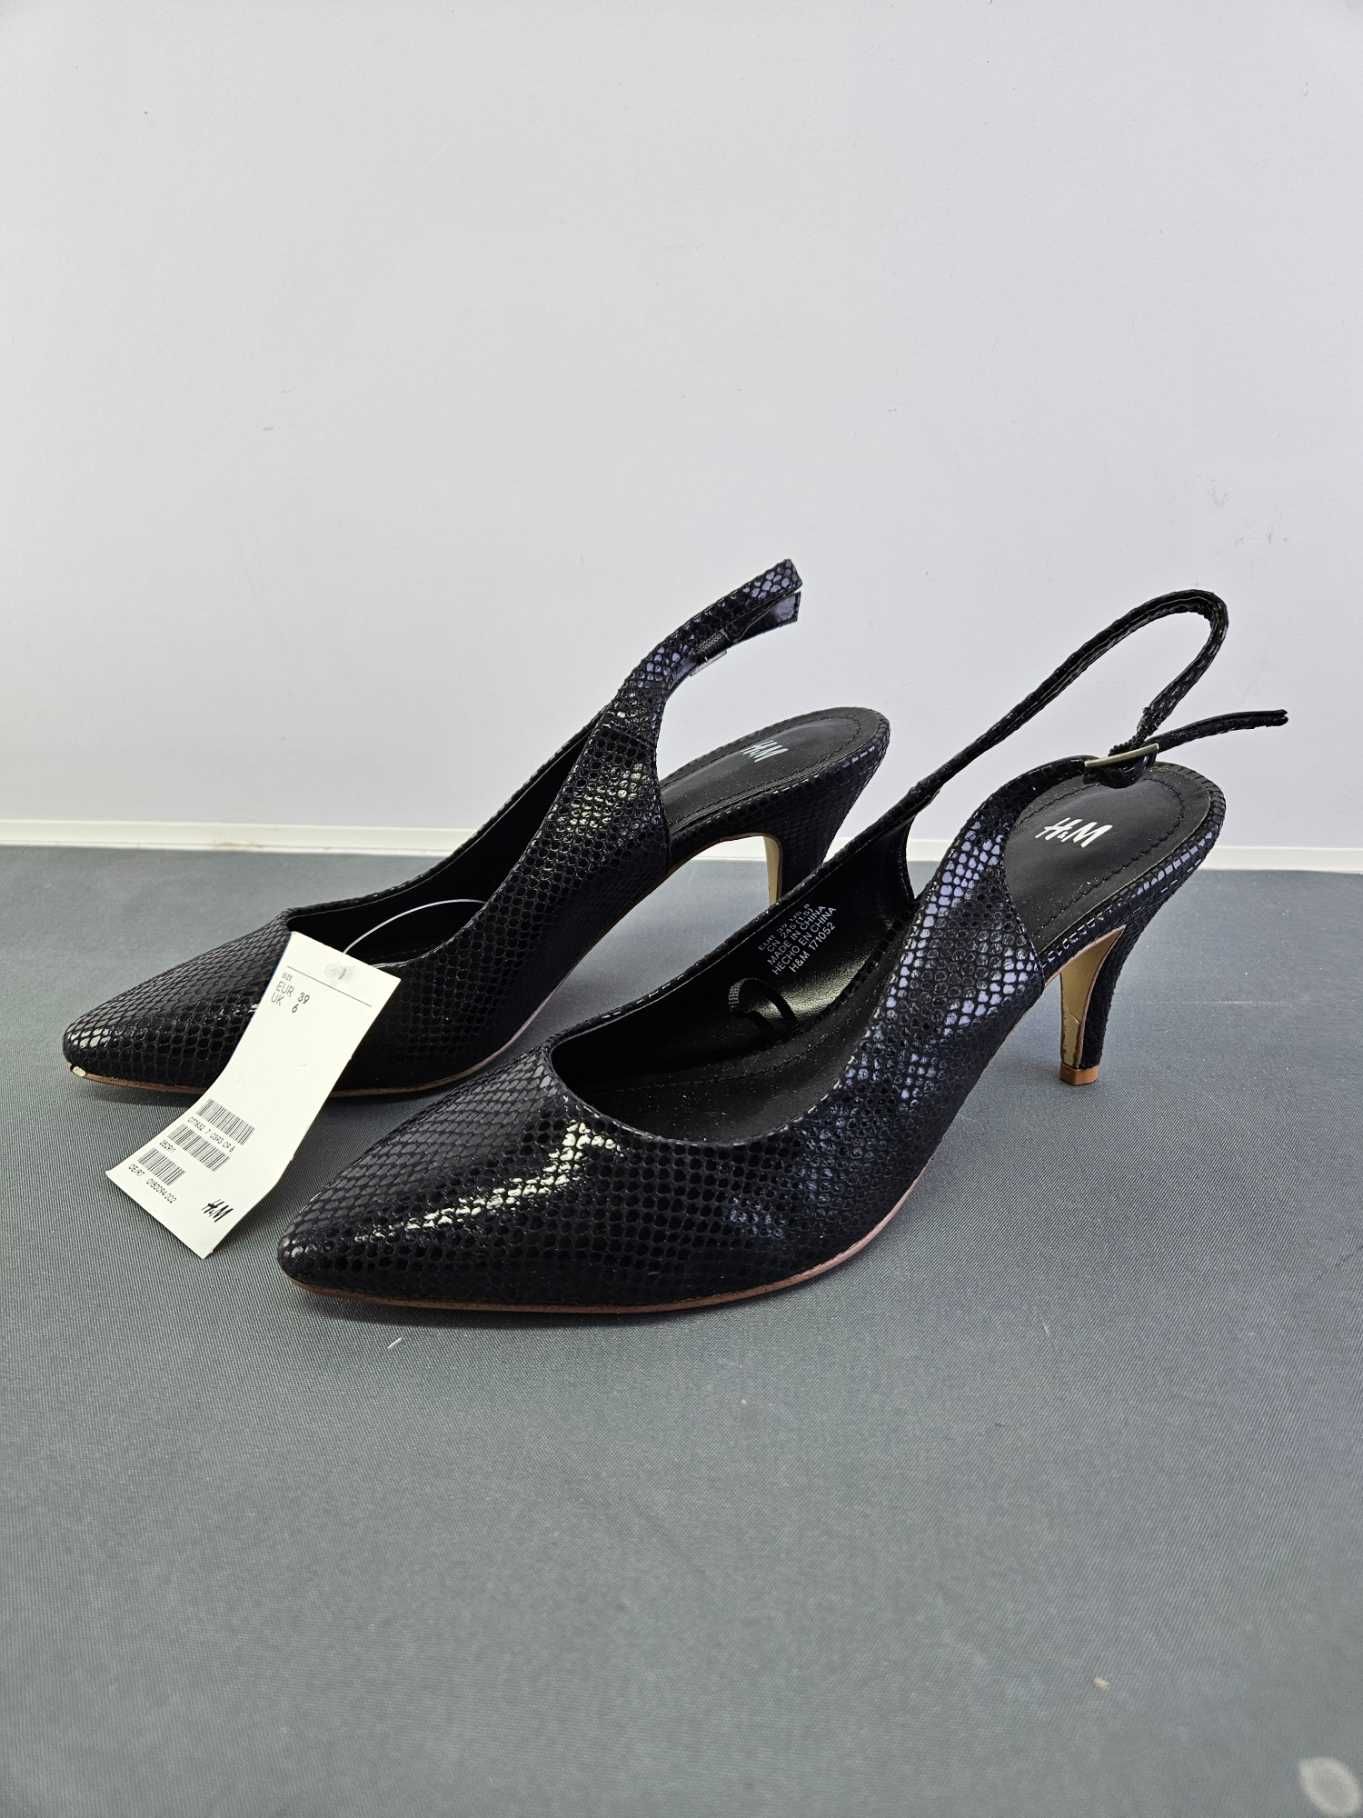 Czarne buty na obcasie z odkrytą piętą H&M rozmiar 39